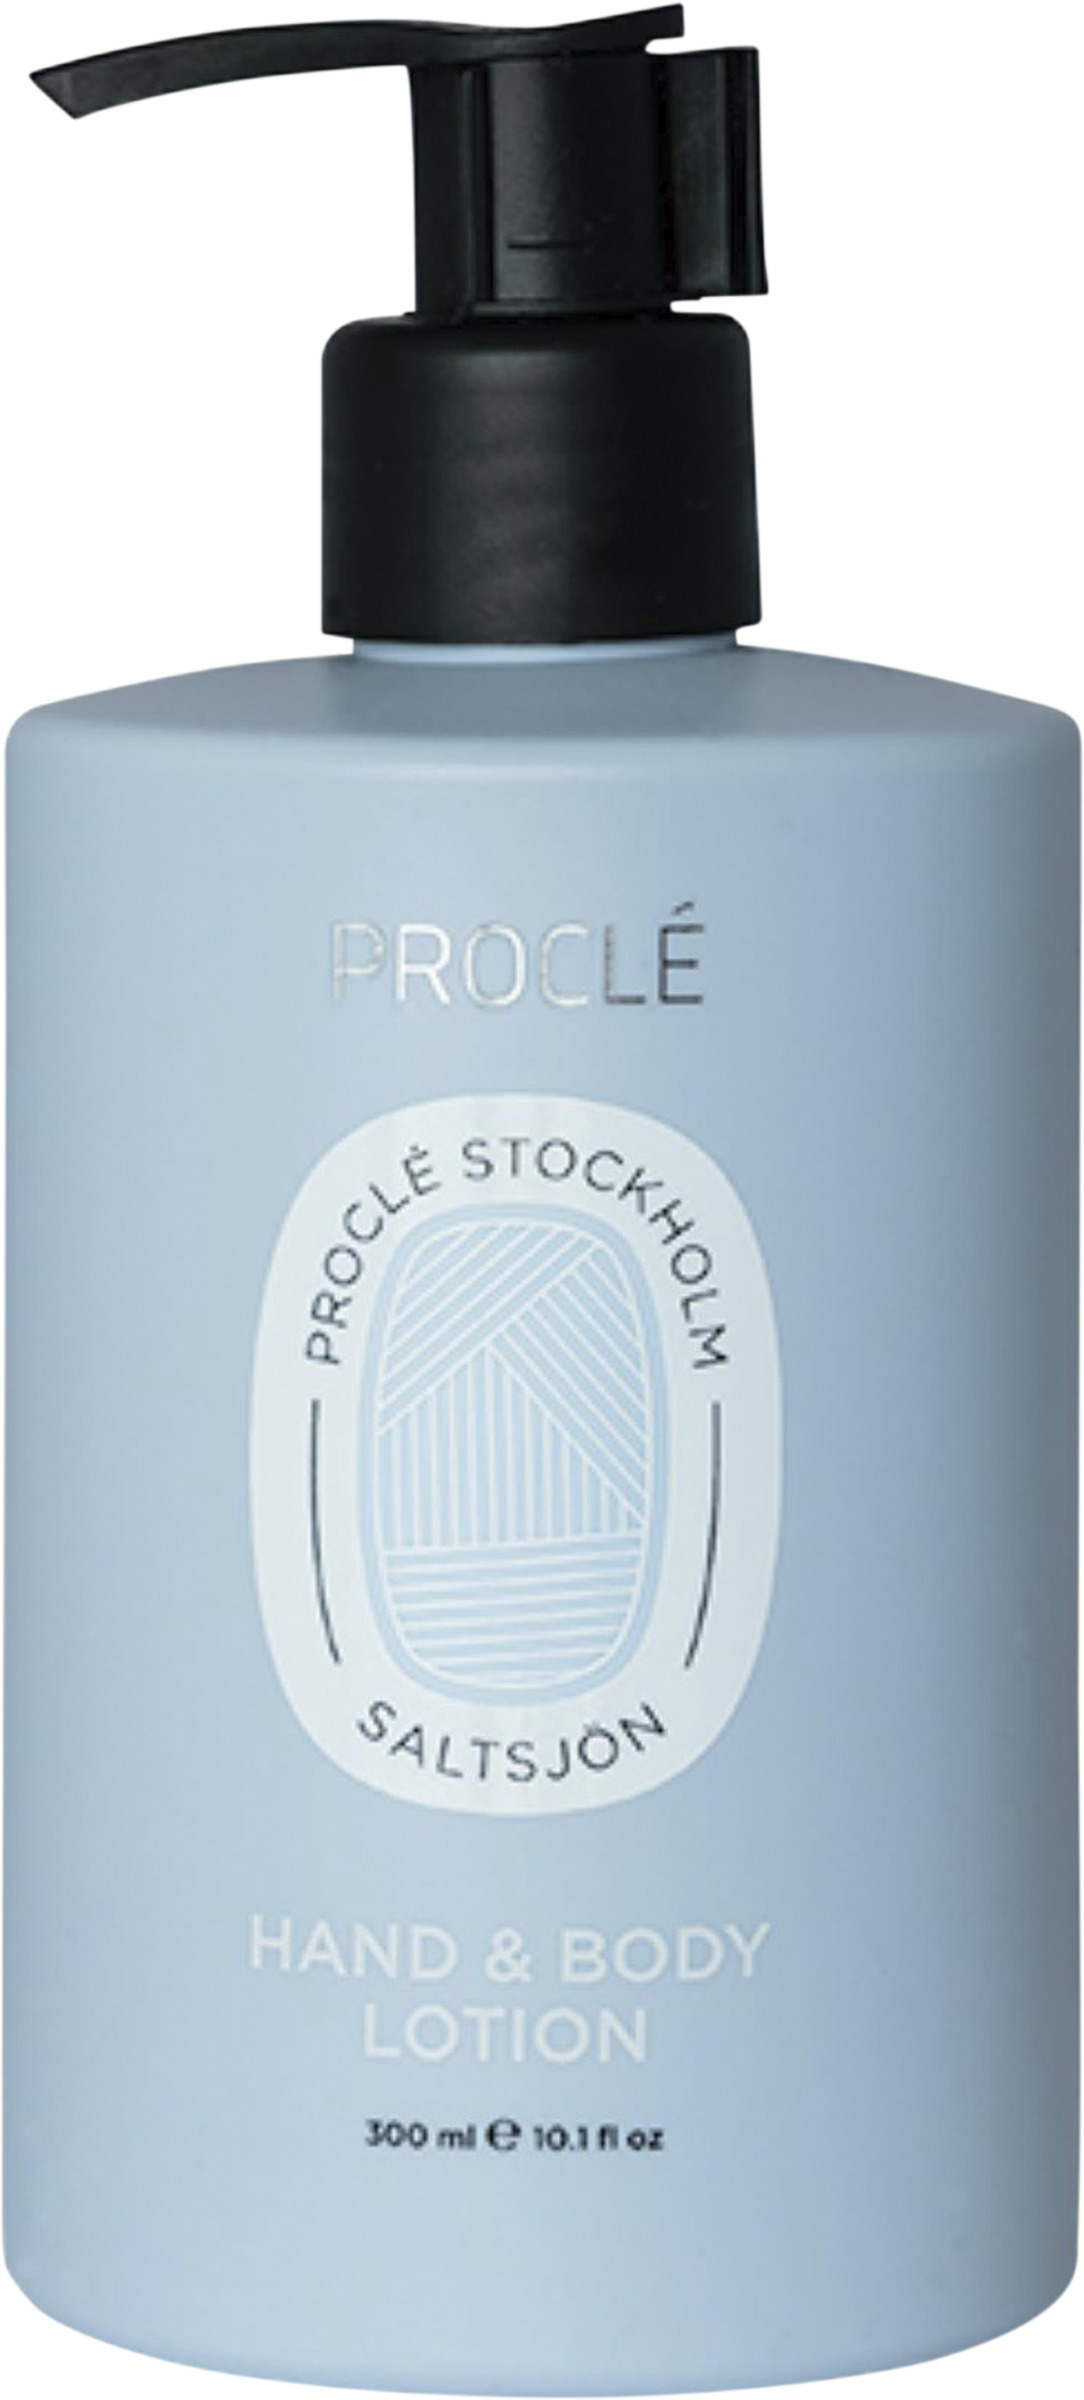 Proclé Stockholm Hand & Body Lotion Saltsjön 300 ml